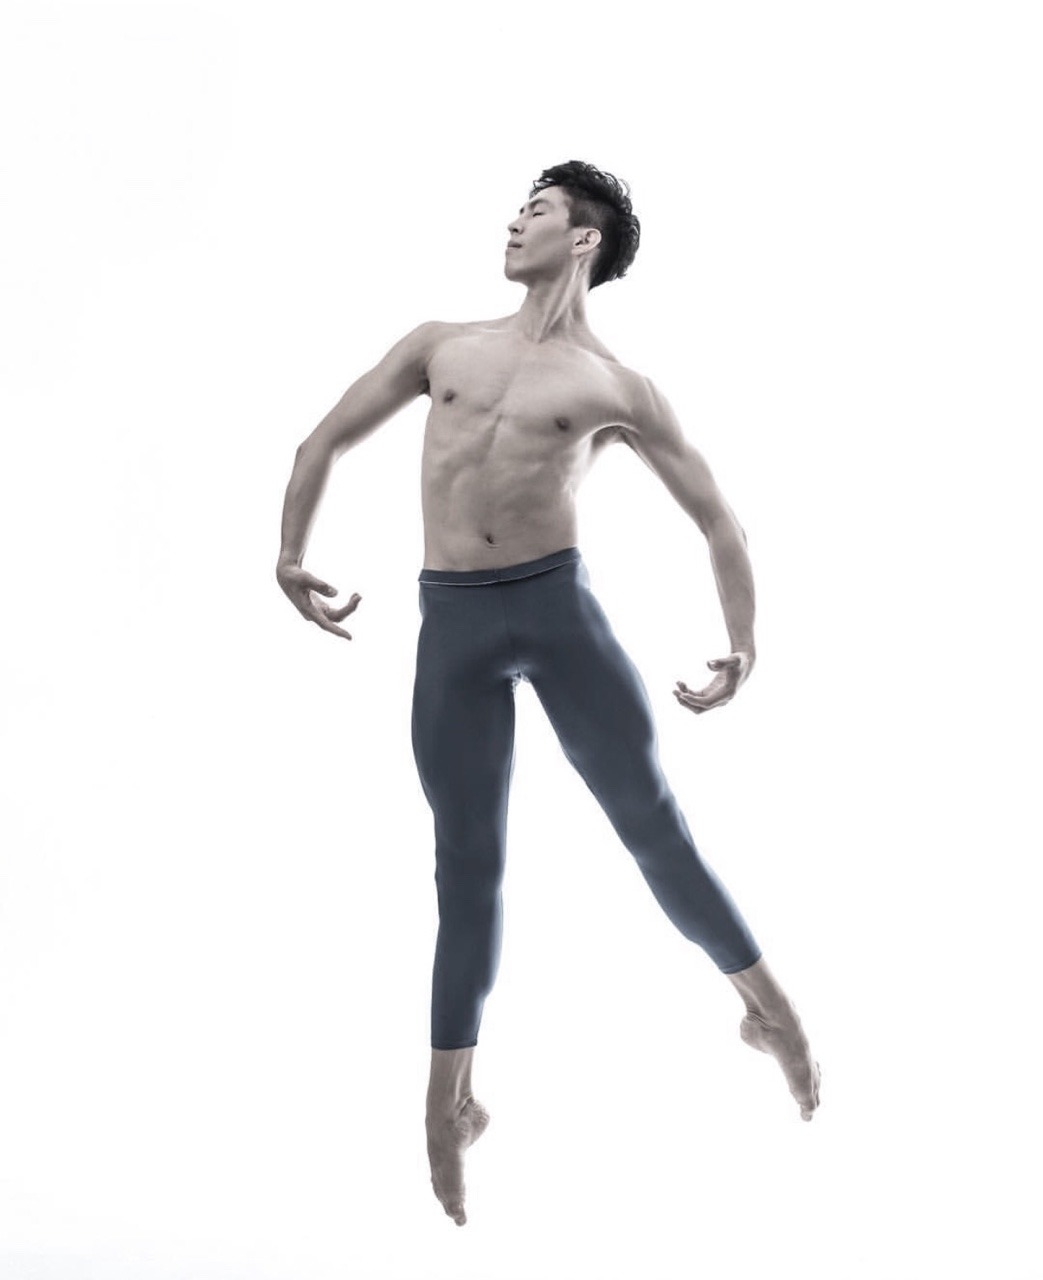 pas-de-duhhh: Jaeyong An dancer with Le Ballets de Monte Carlo photographed by Yoon